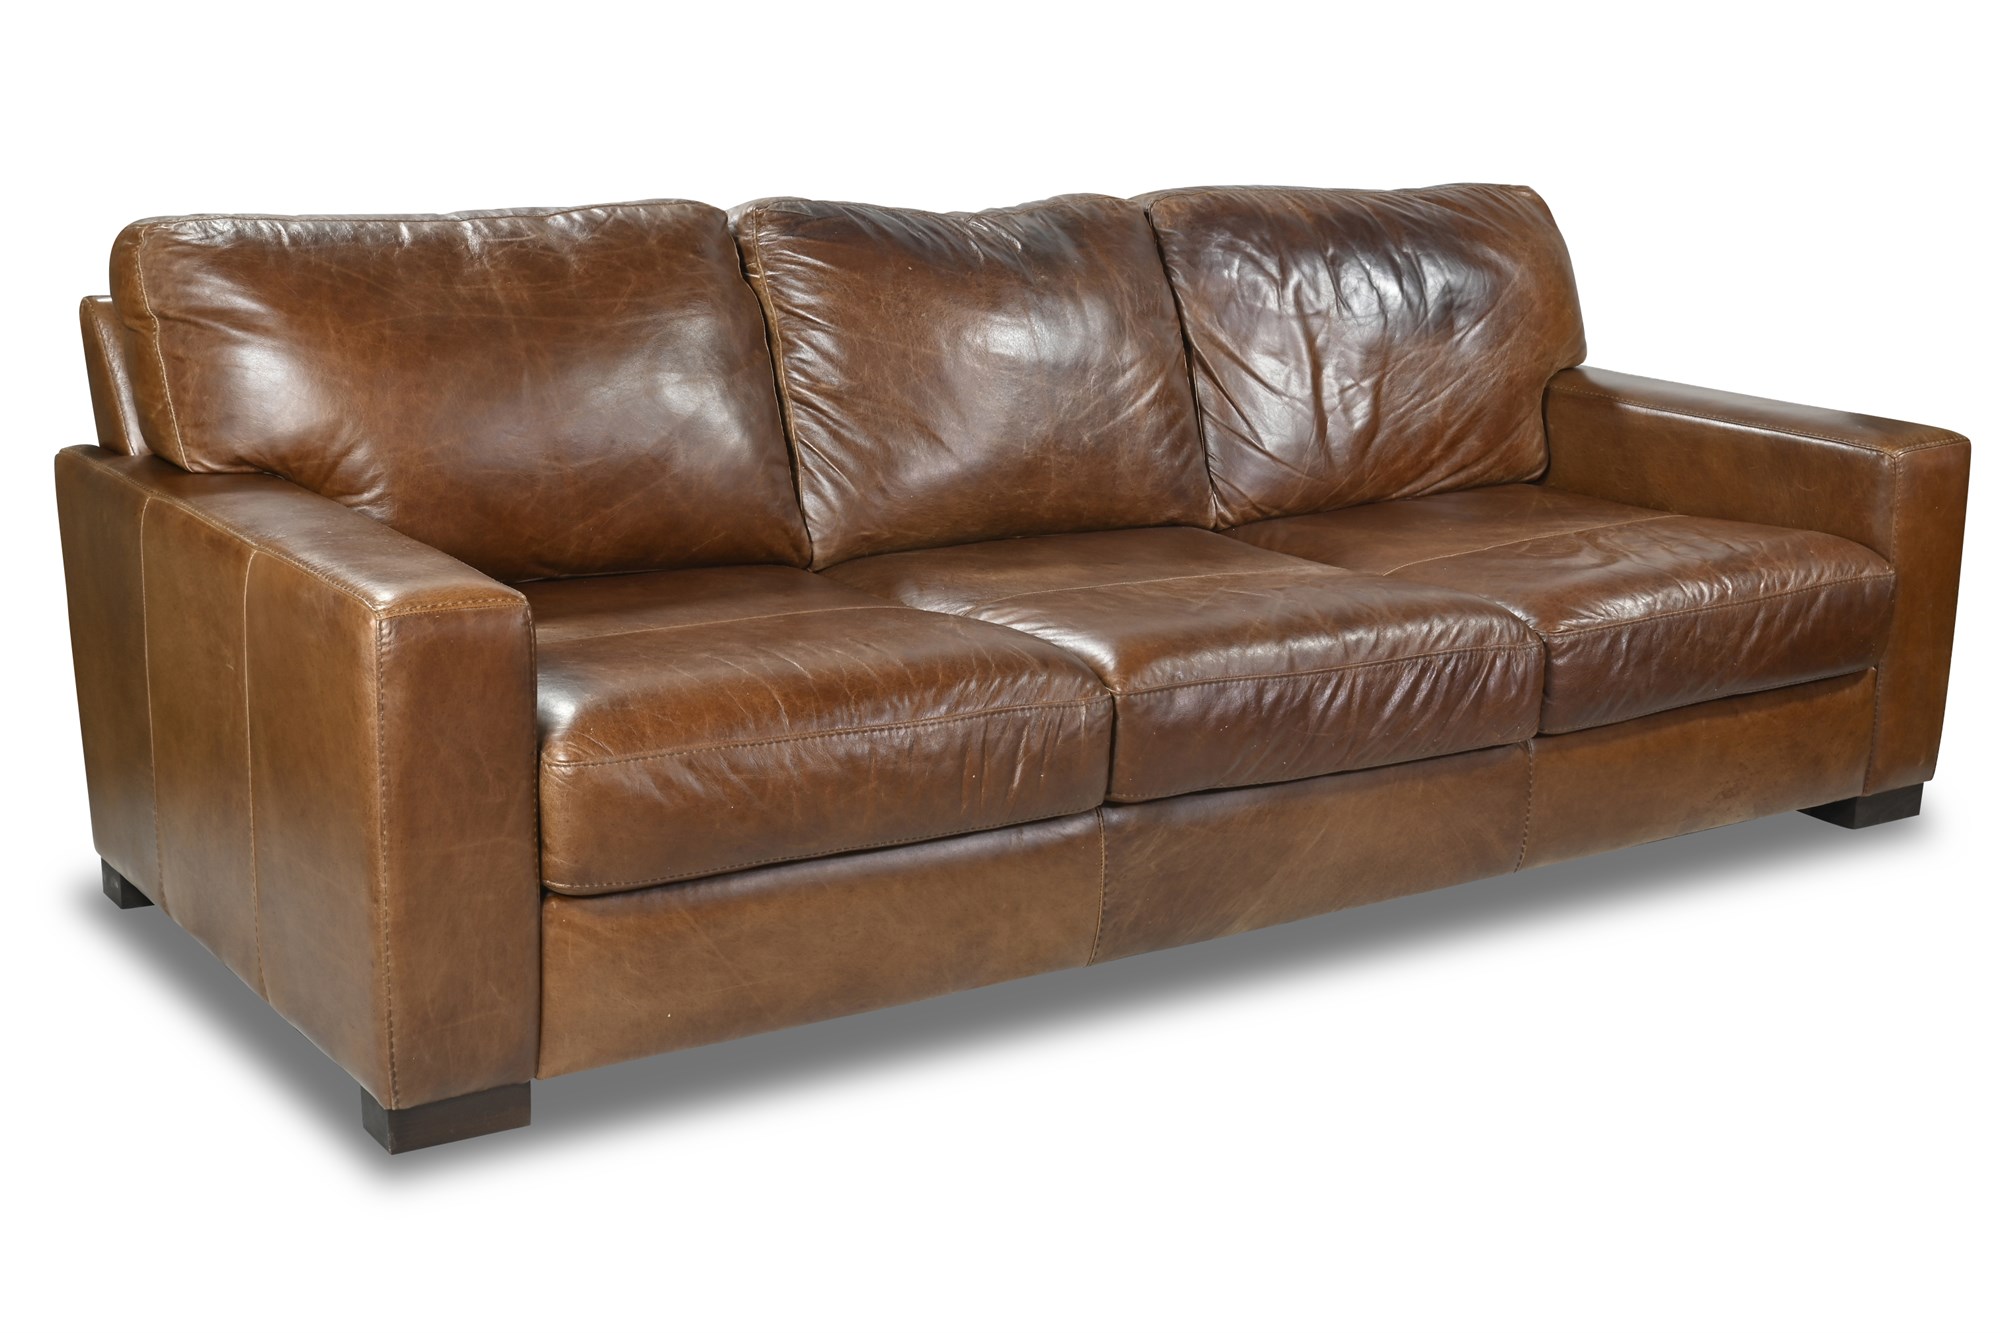 softline leather sofa in vintage tobacco